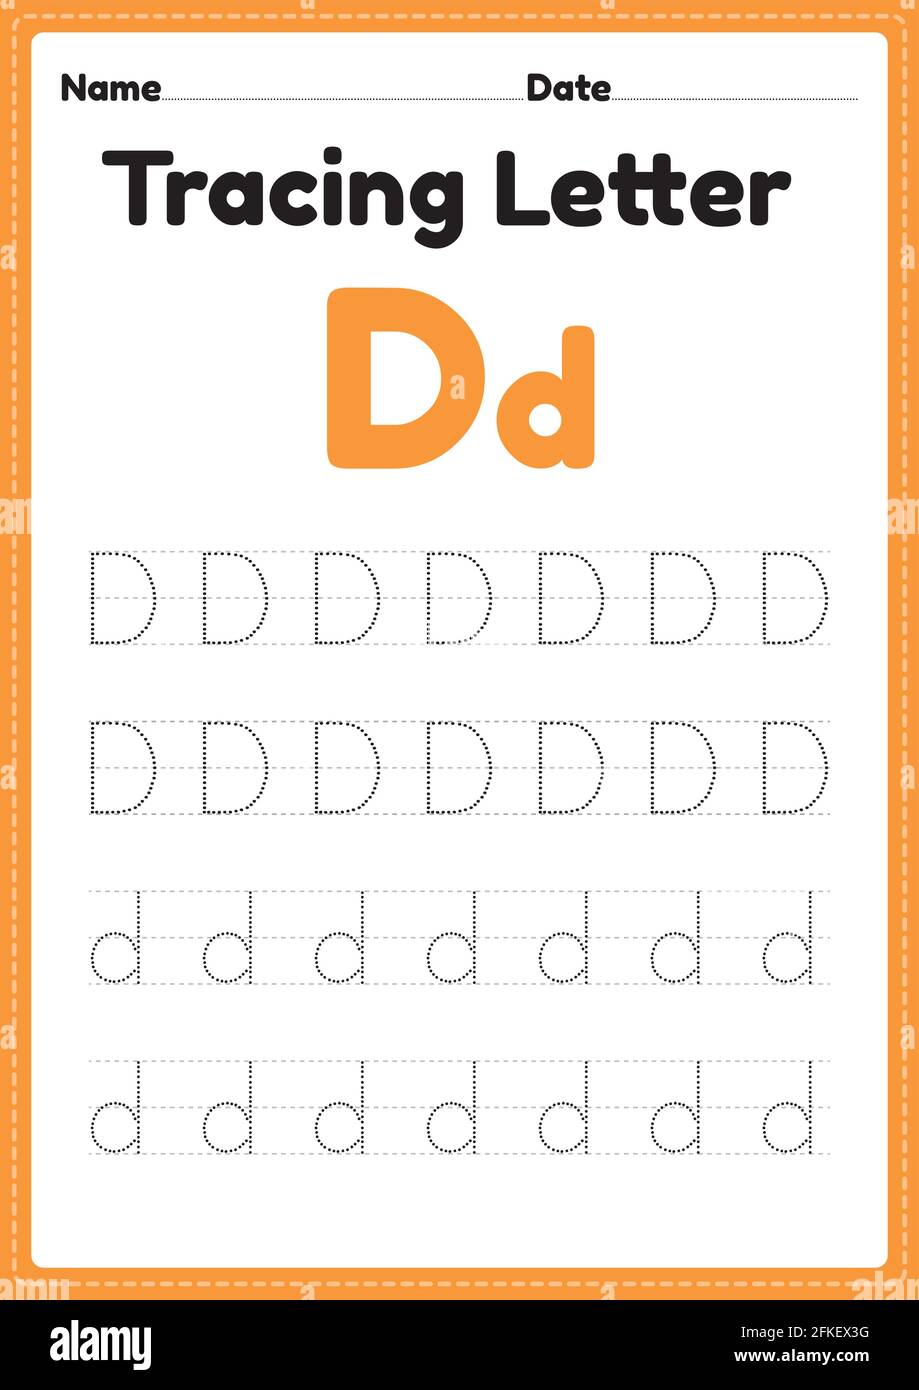 Tracing letter d alphabet worksheet for kindergarten and preschool Regarding Letter D Worksheet For Preschool